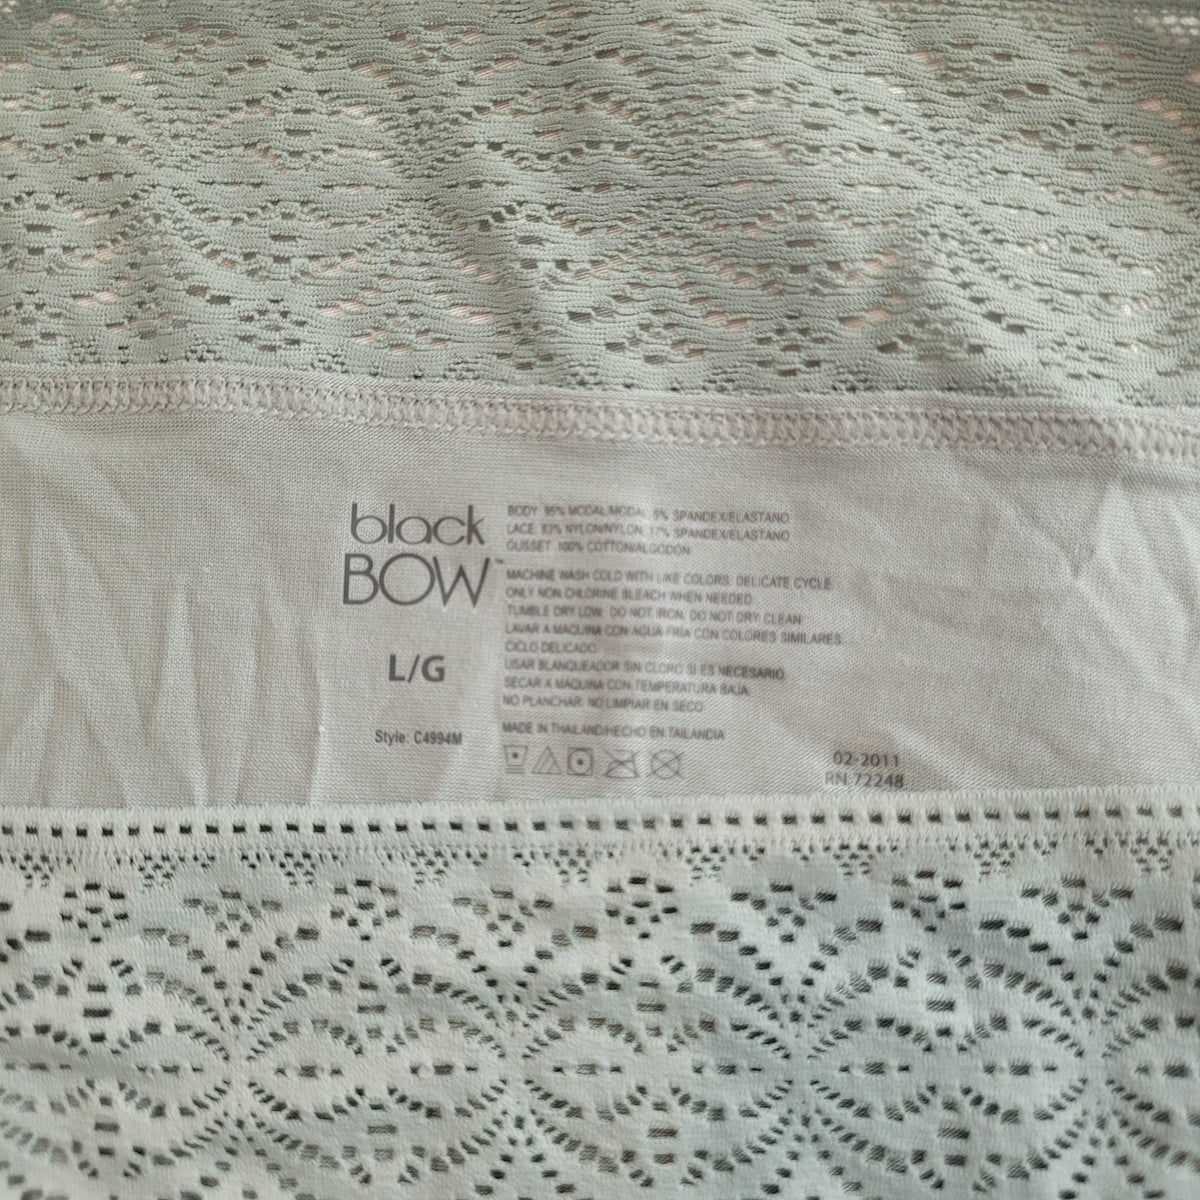 BLACK BOW Women's 5 Pack Modal Stretch Brief underwear - Deblu